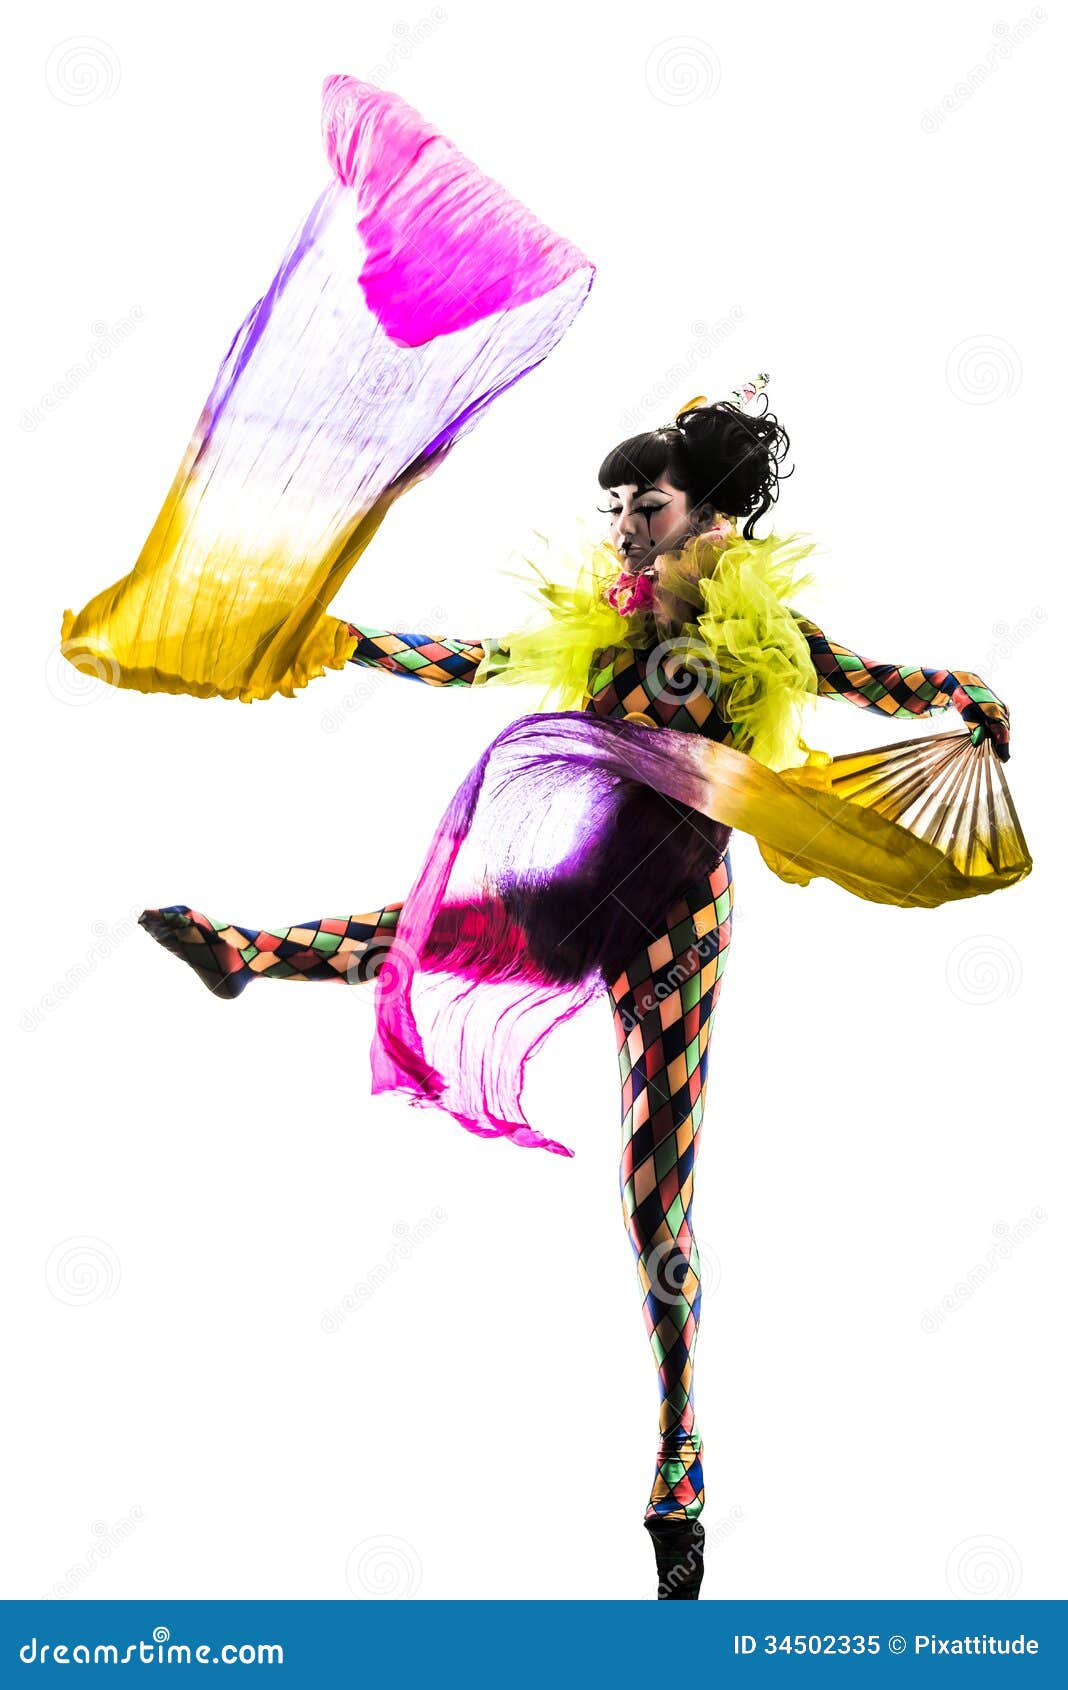 woman harlequin circus dancer performer silhouette